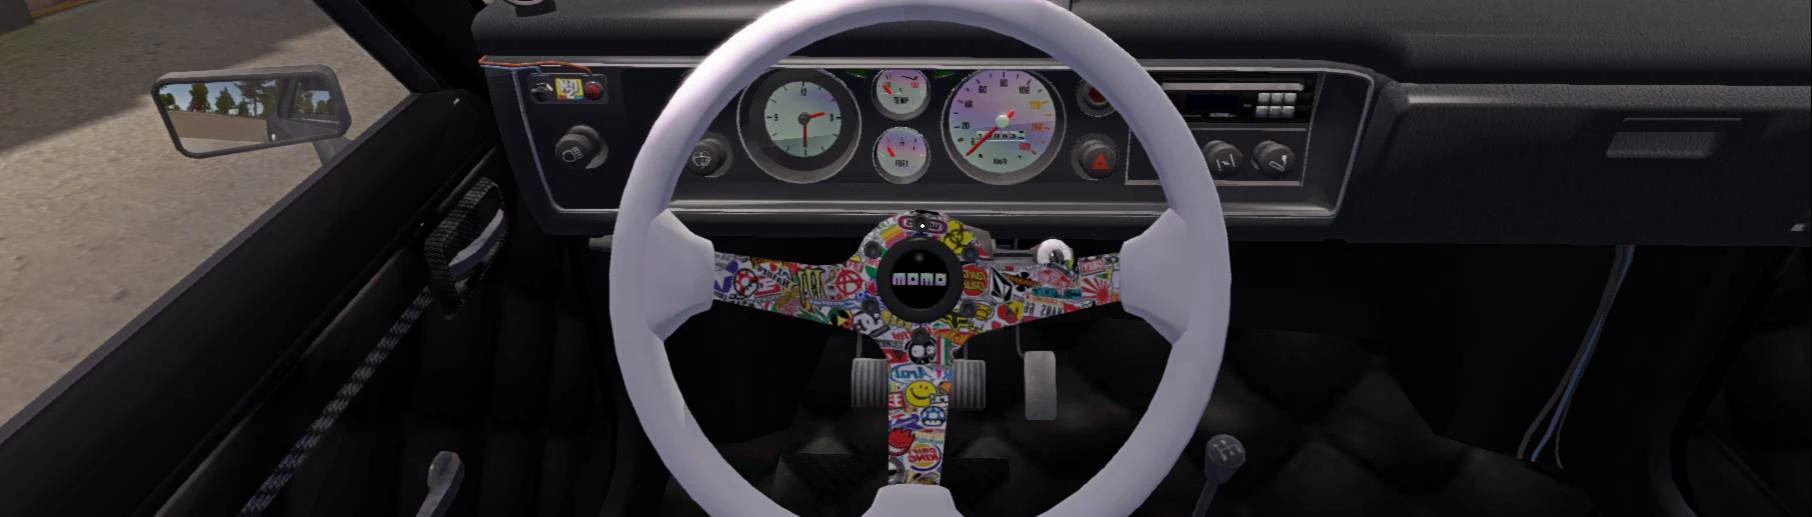 My Summer Car Wiki - My Summer Car Steering Wheel, HD Png Download